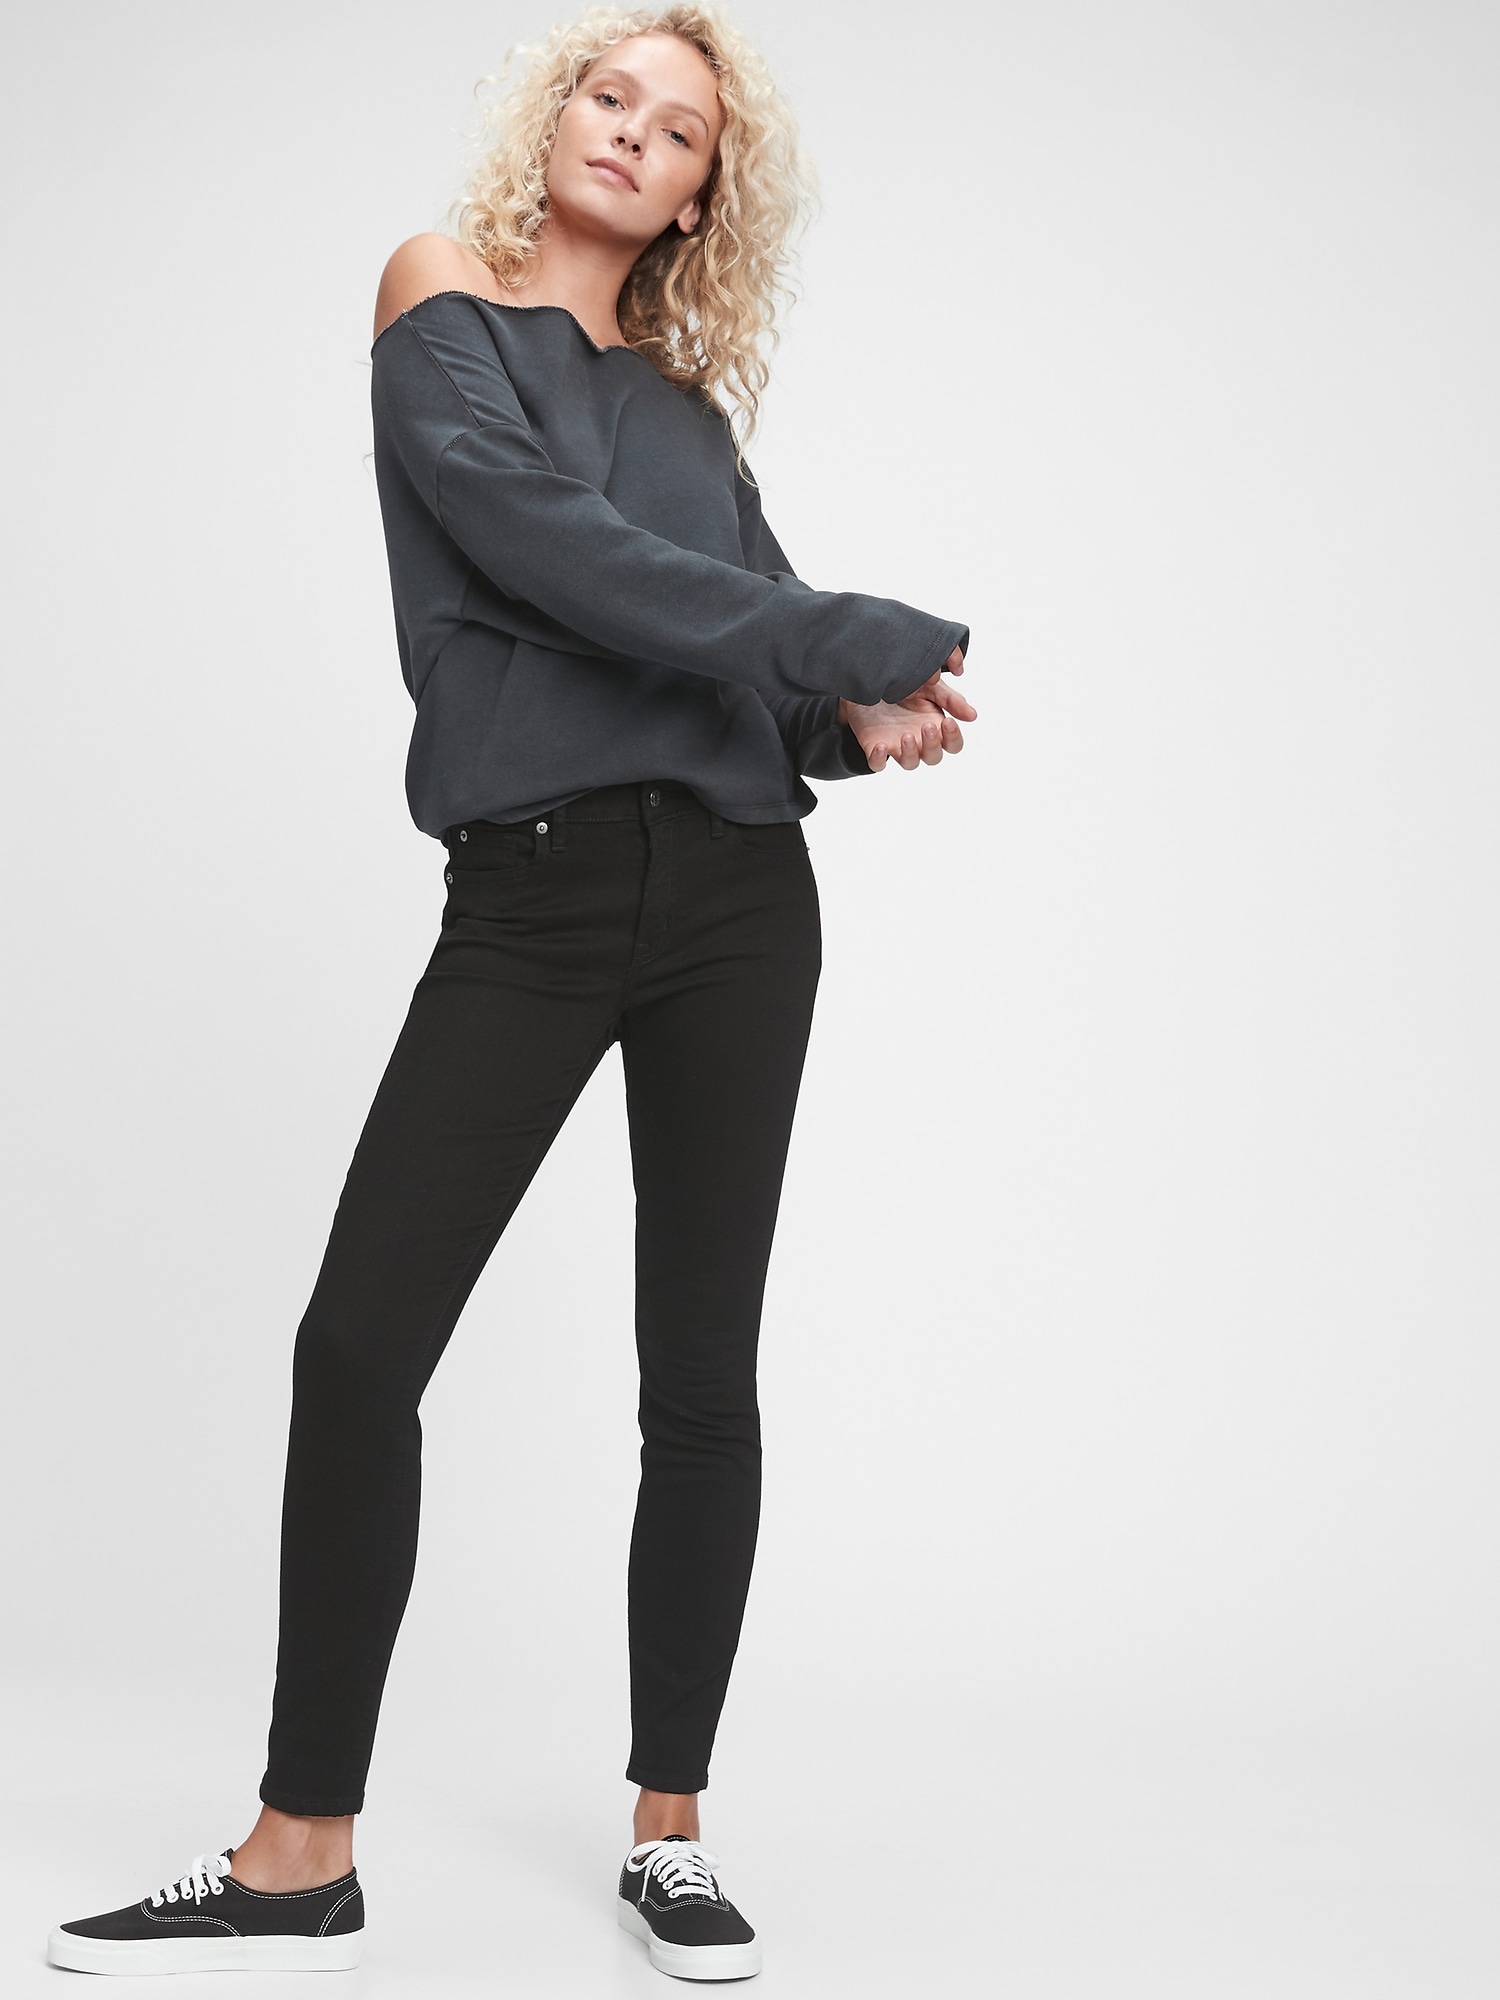 GAP, Jeans, Gap Mid Rise Jeggings Petite 29 In Black